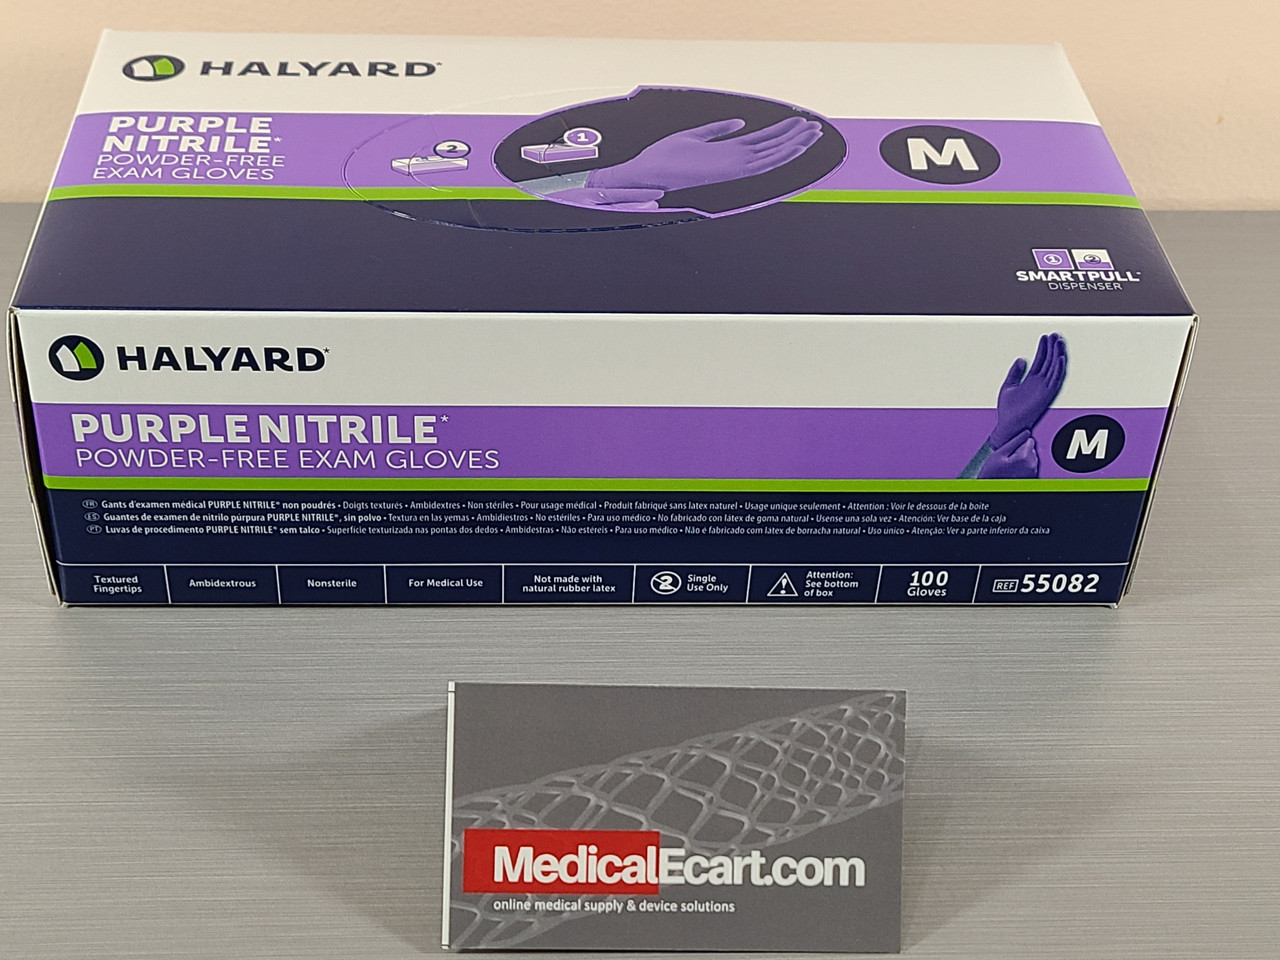 O&M Halyard, 55082, Exam Glove Purple Nitrile Medium,